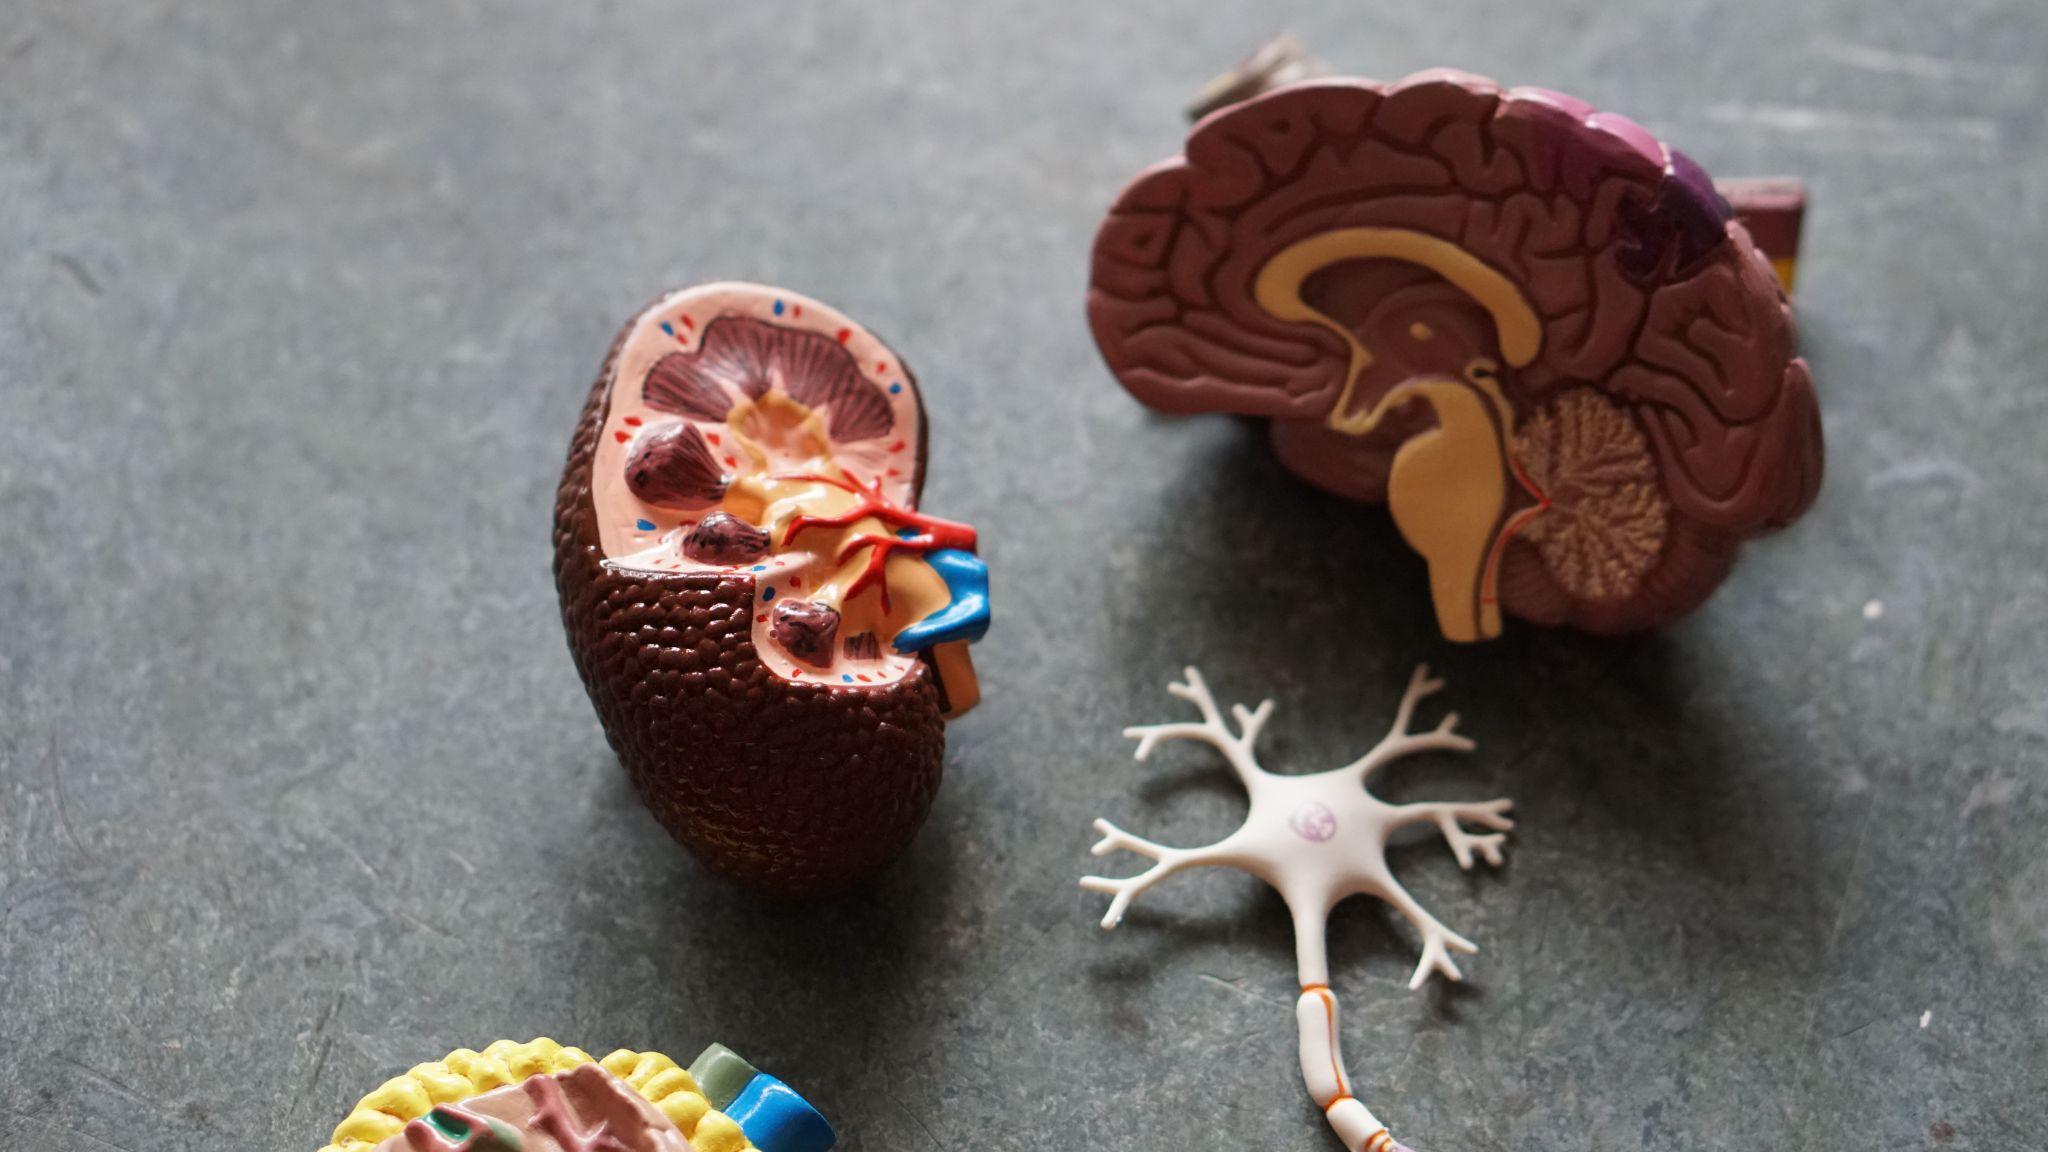 Kidneys anatomy model for display